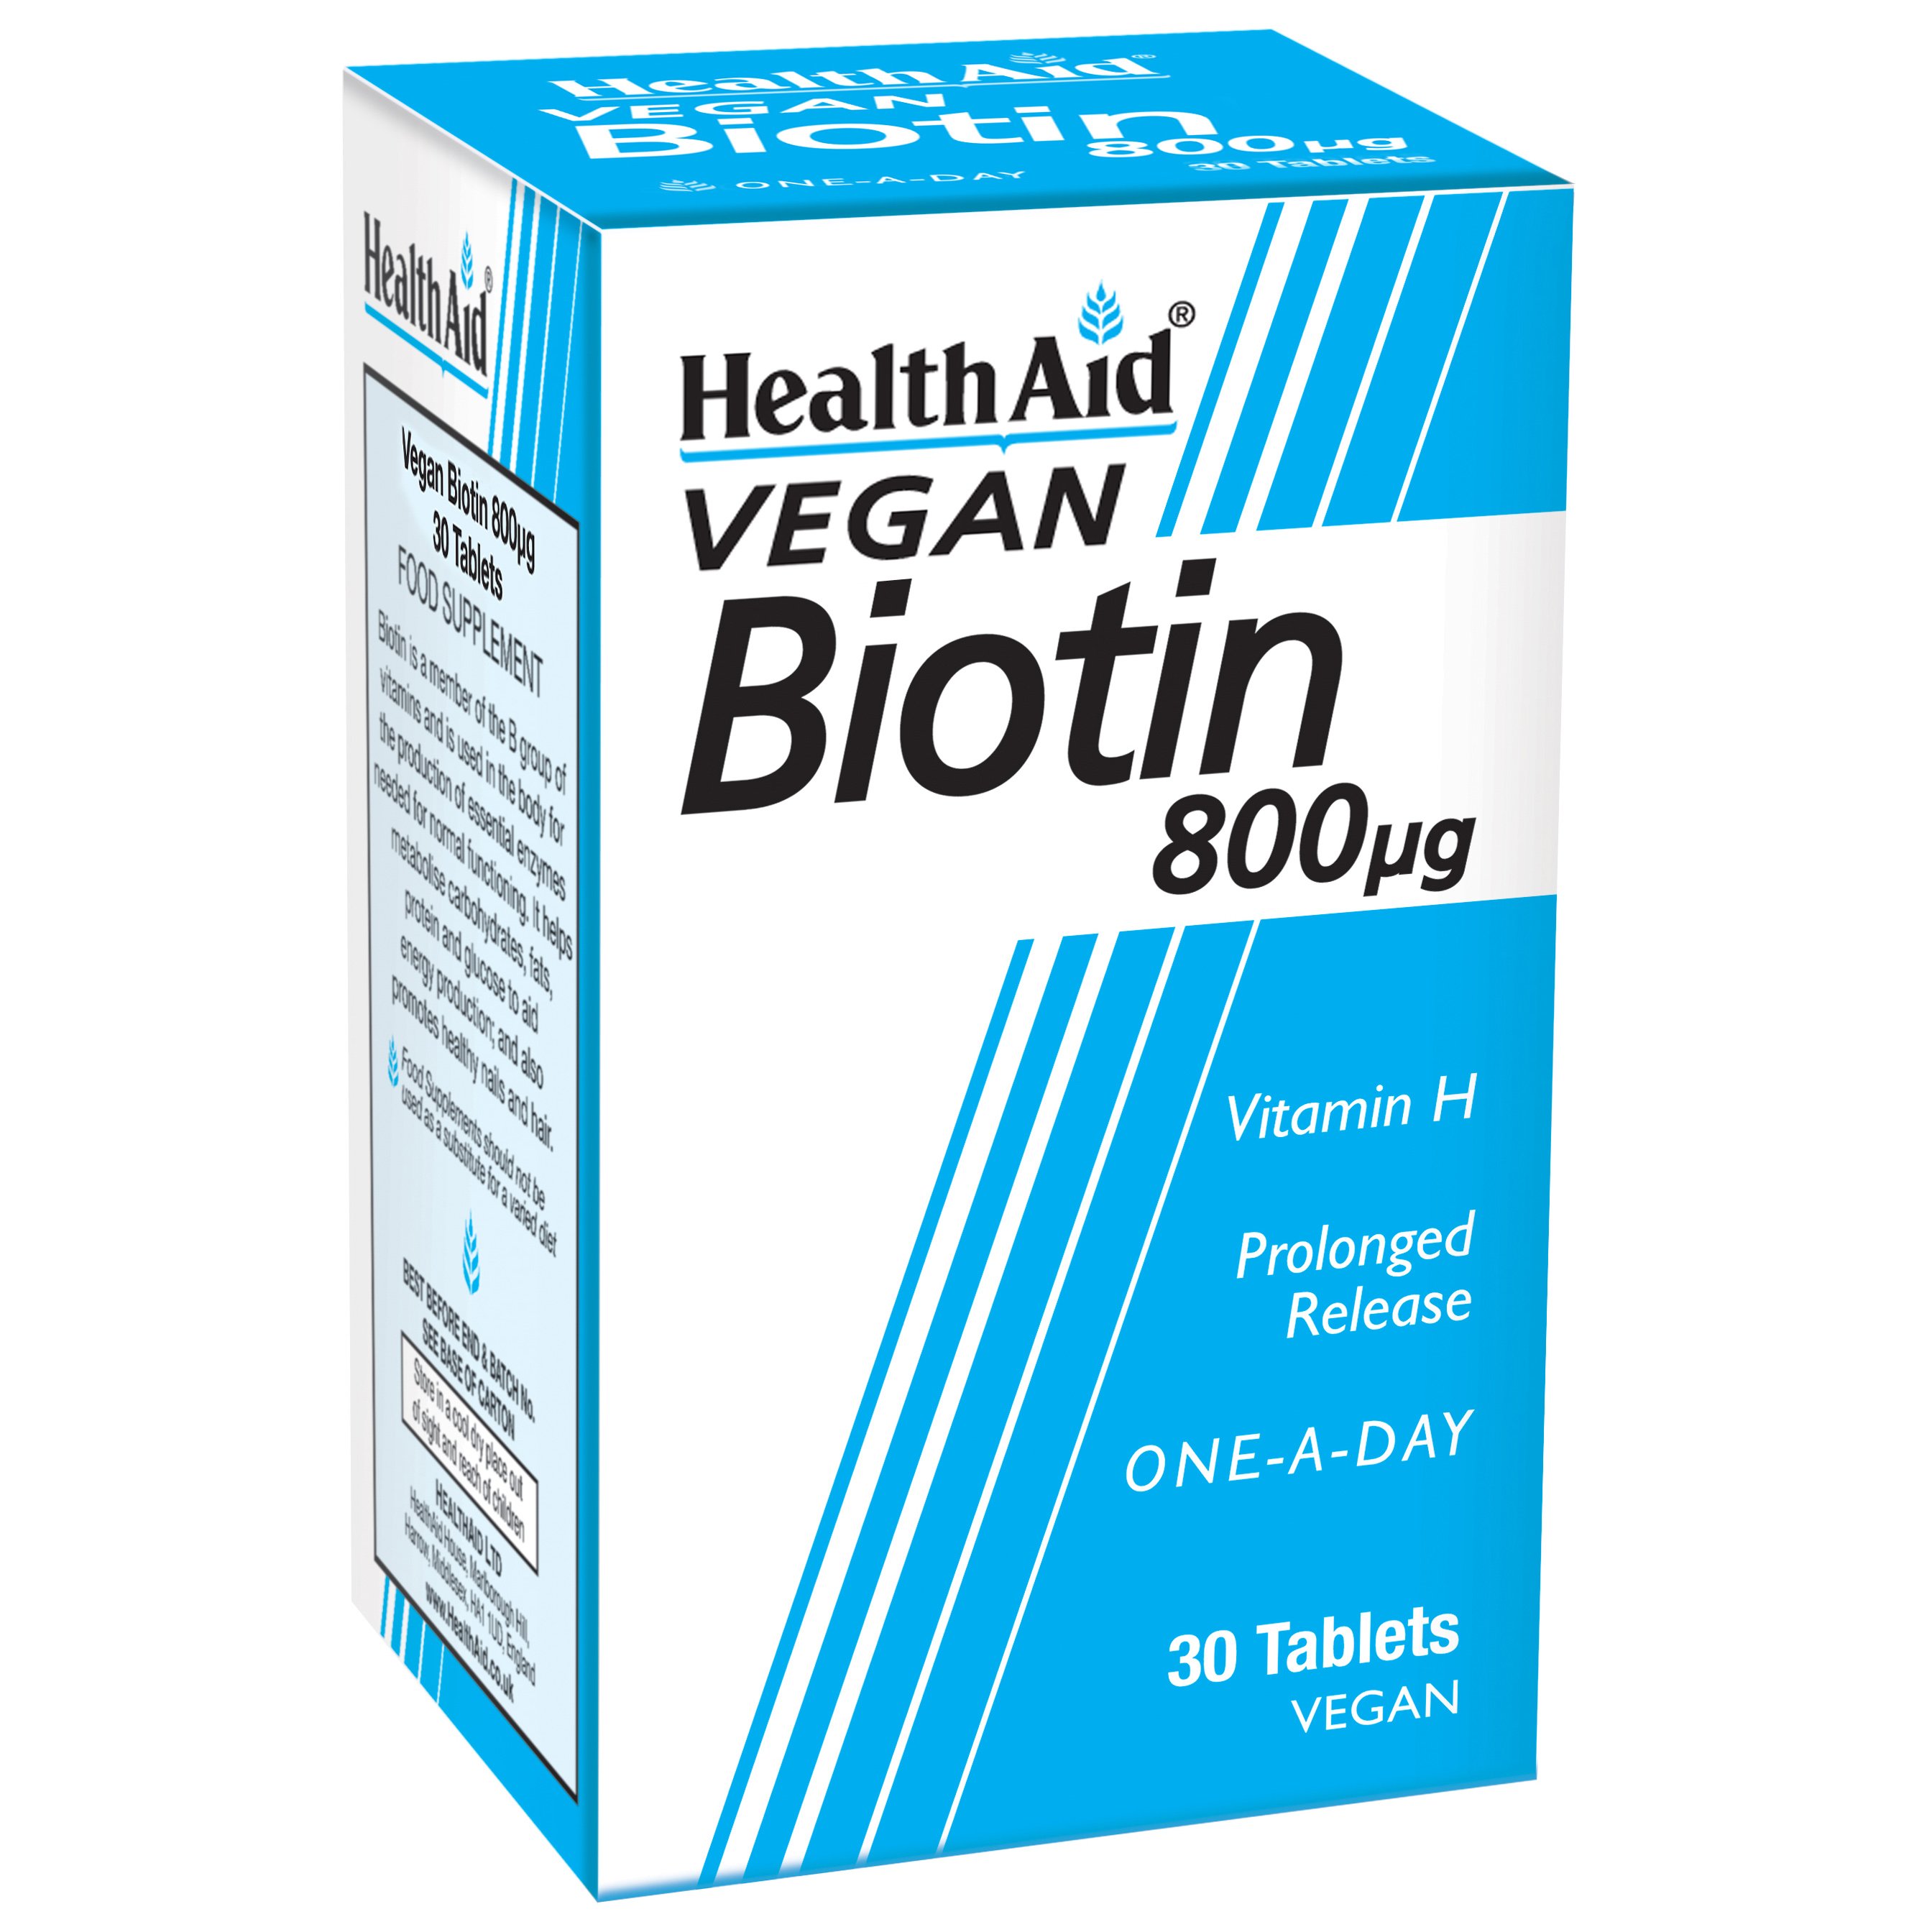 Health Aid Biotin (vitamin H) 800mg 30tabs,Συμπλήρωμα Διατροφής, Ενισχύει τα Μαλλιά, το Δέρμα και τα Νύχια, Βραδείας Αποδέσμευση